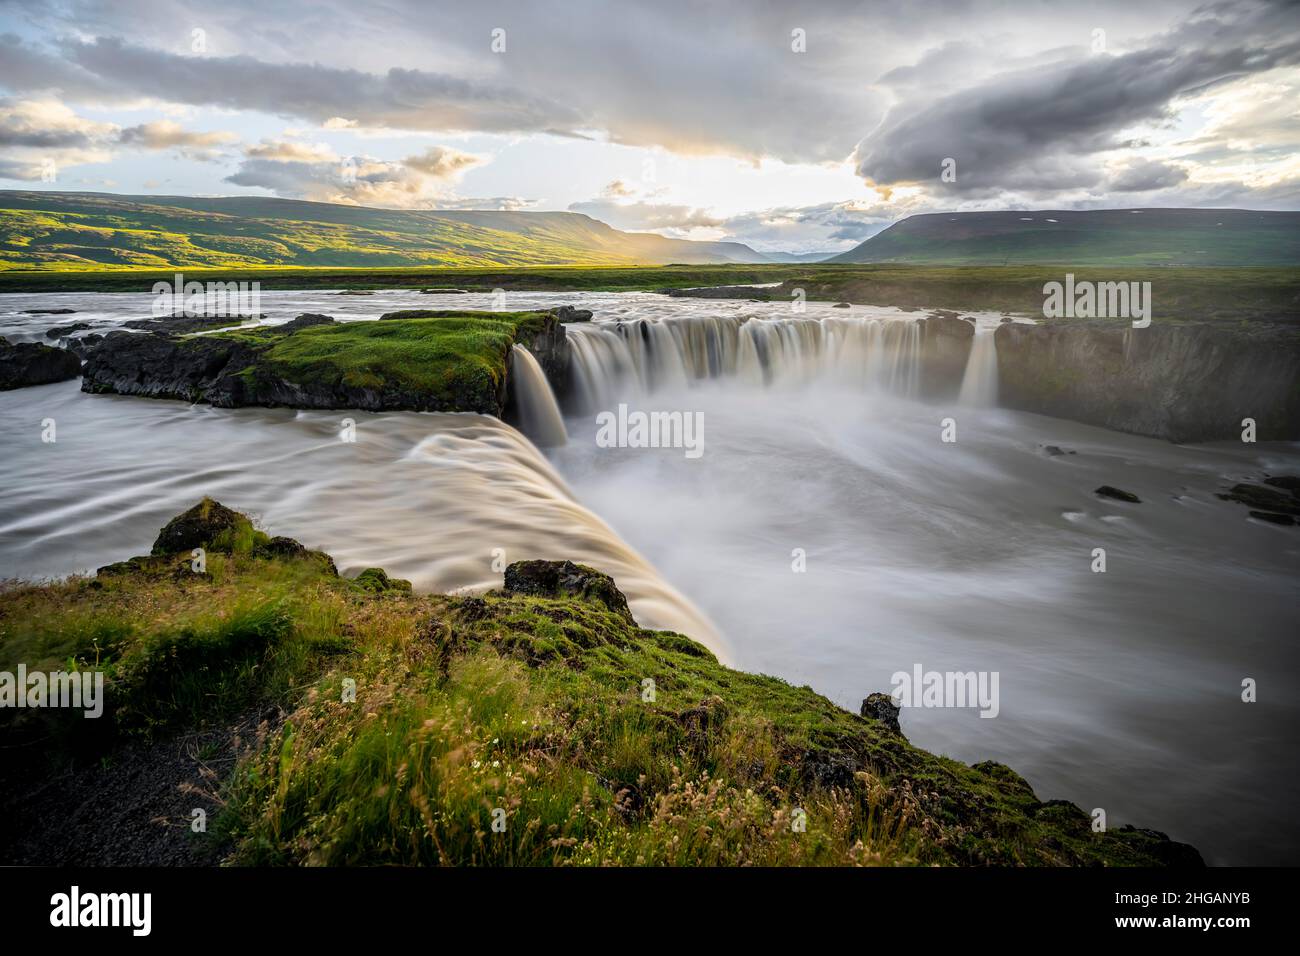 Cascata di Gooafoss in estate, fiume Skjalfandafljot, Norourland vestra, Islanda settentrionale, Islanda Foto Stock